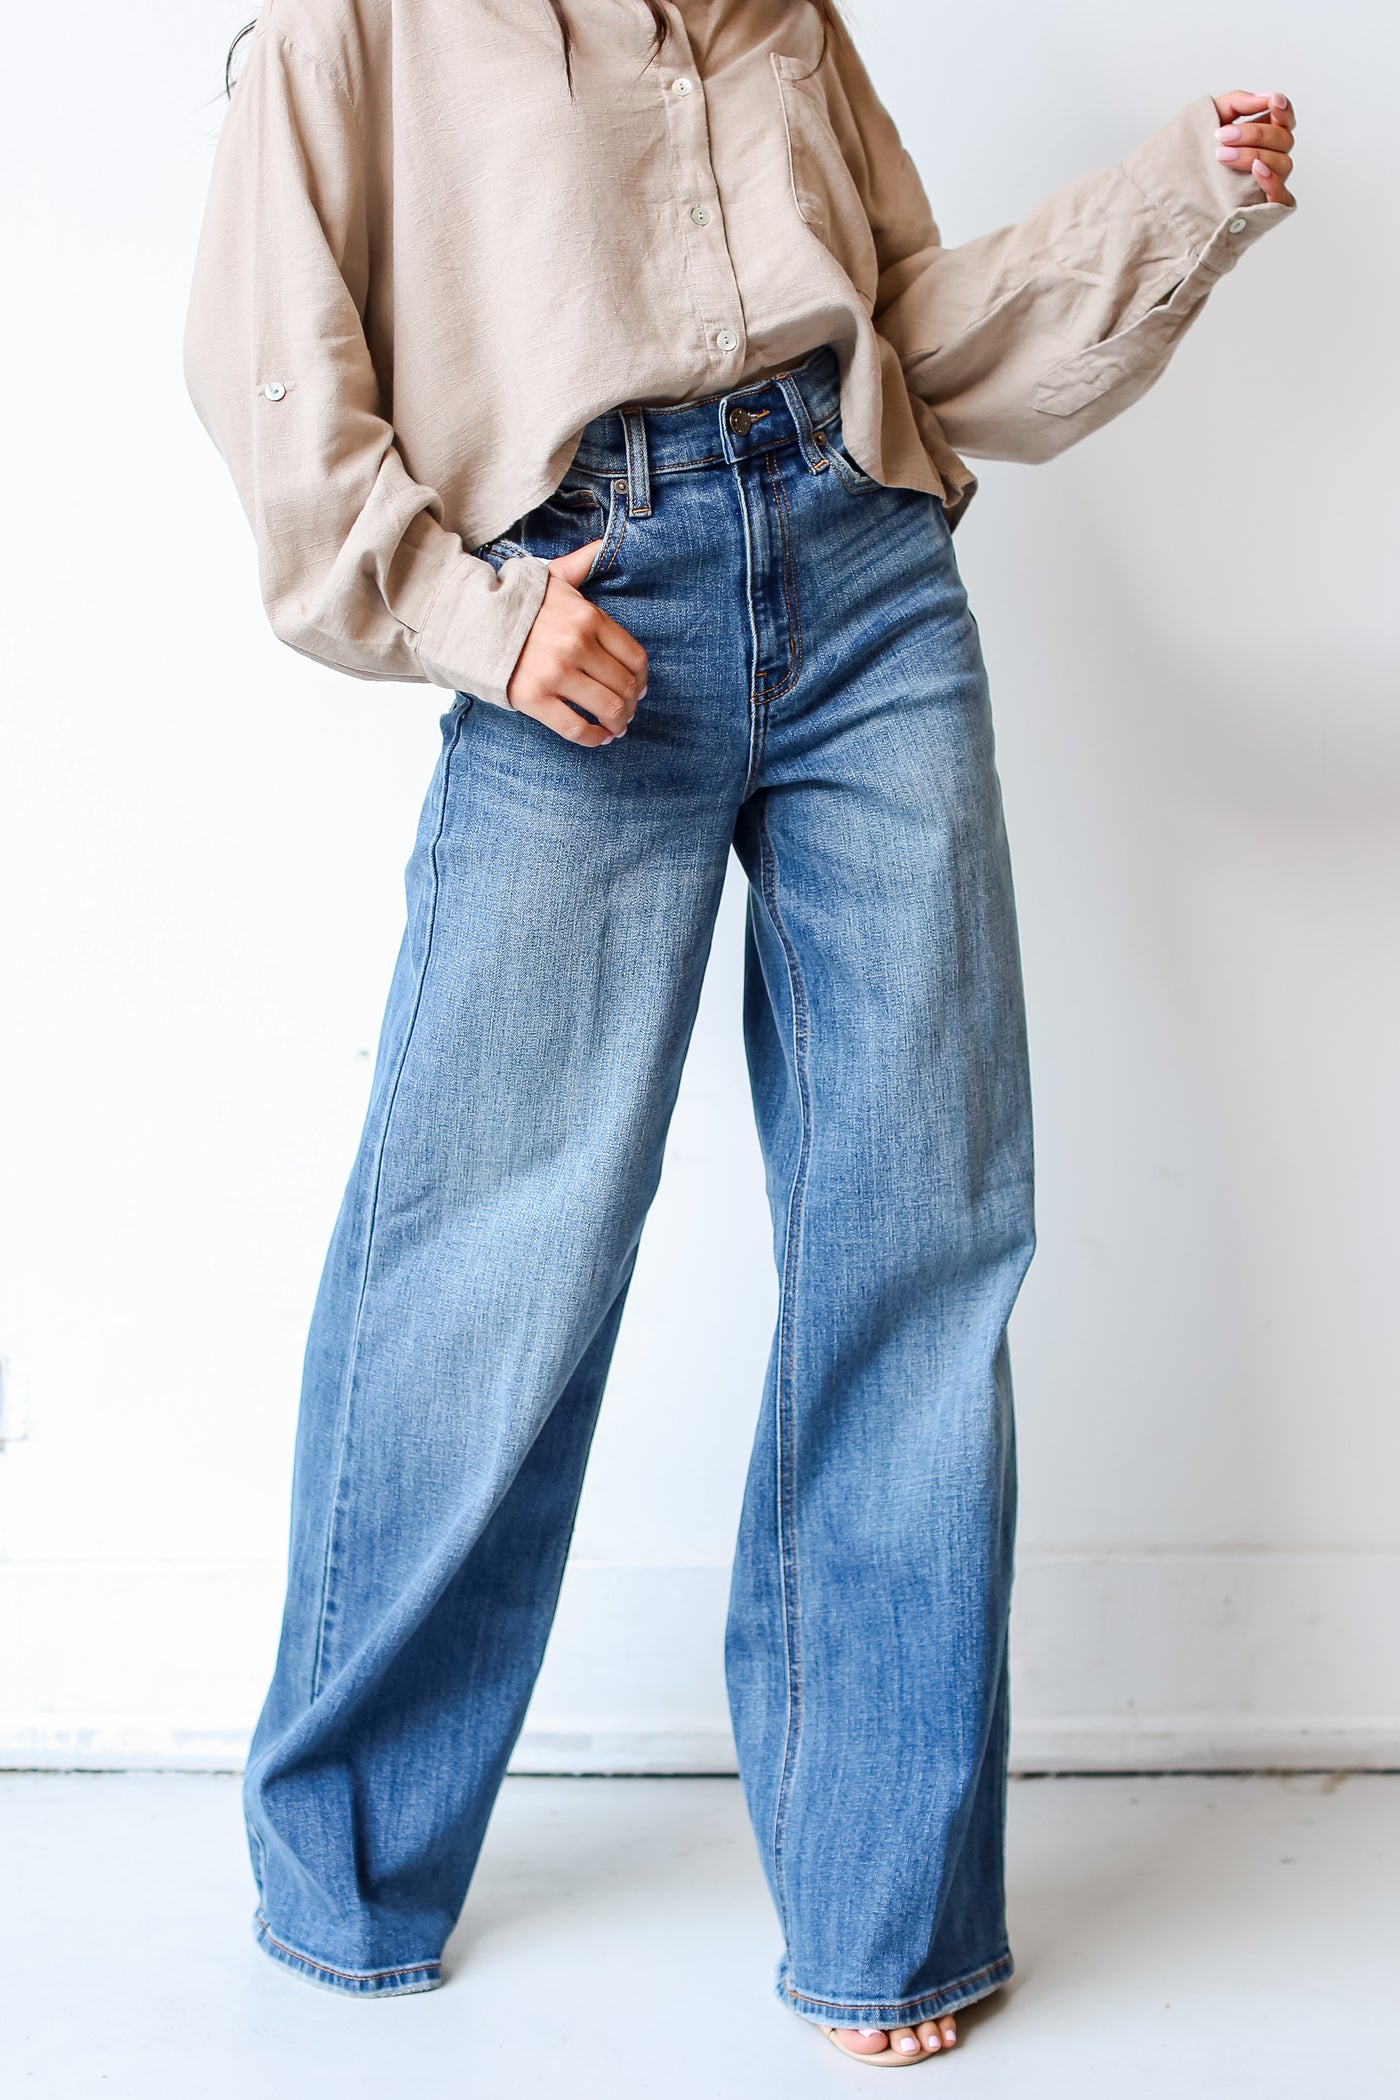 Dress ShopDressUp Medium – Wash Jeans Trendy | Wide Up Leg